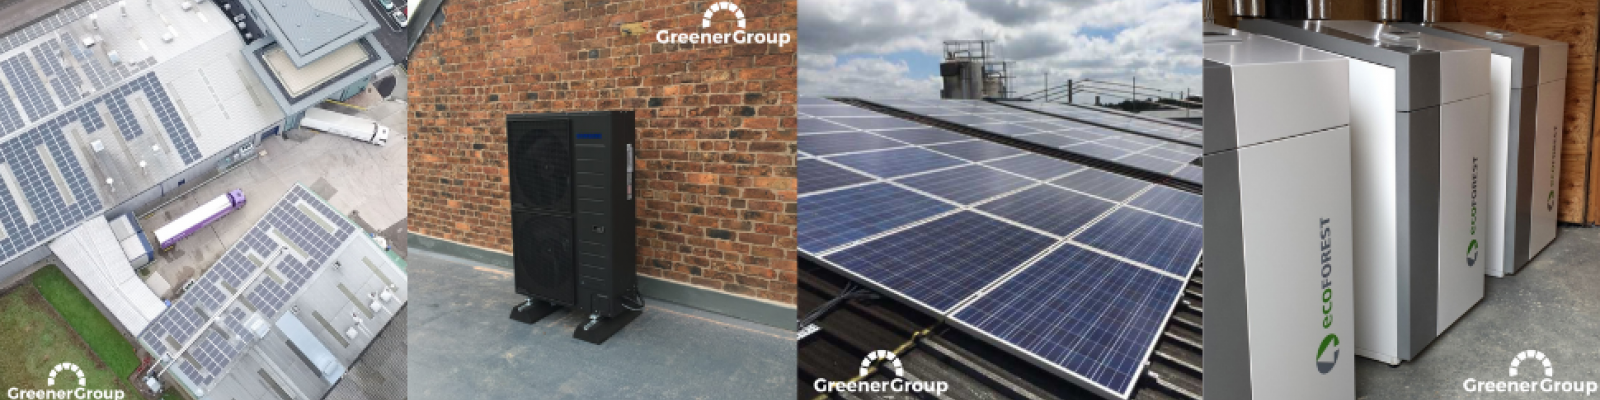 Solar panels, Air source heat pumps and Ground source heat pumps